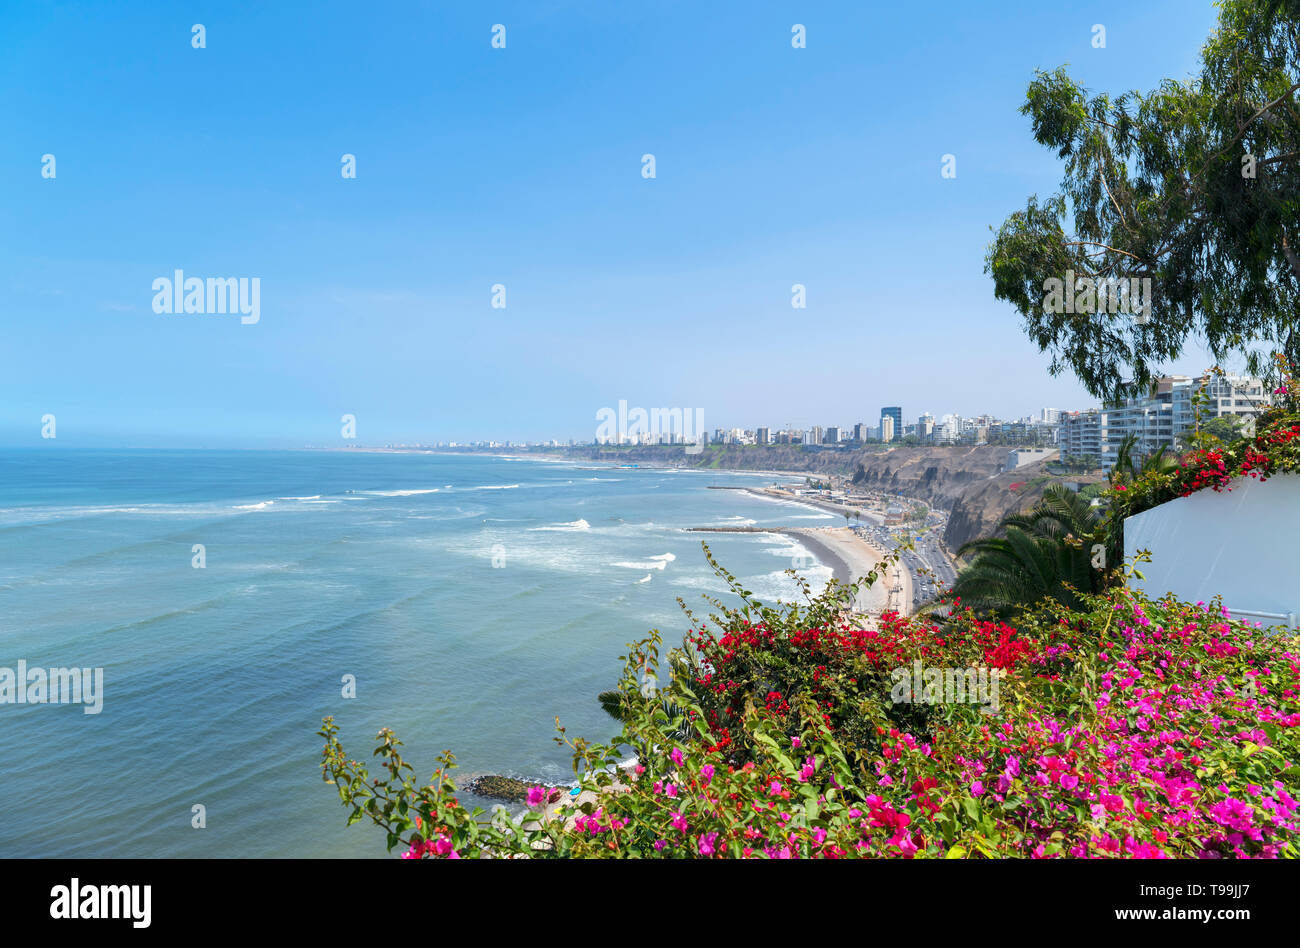 The beach and coastline in the Barranco district, Lima, Peru, South America Stock Photo